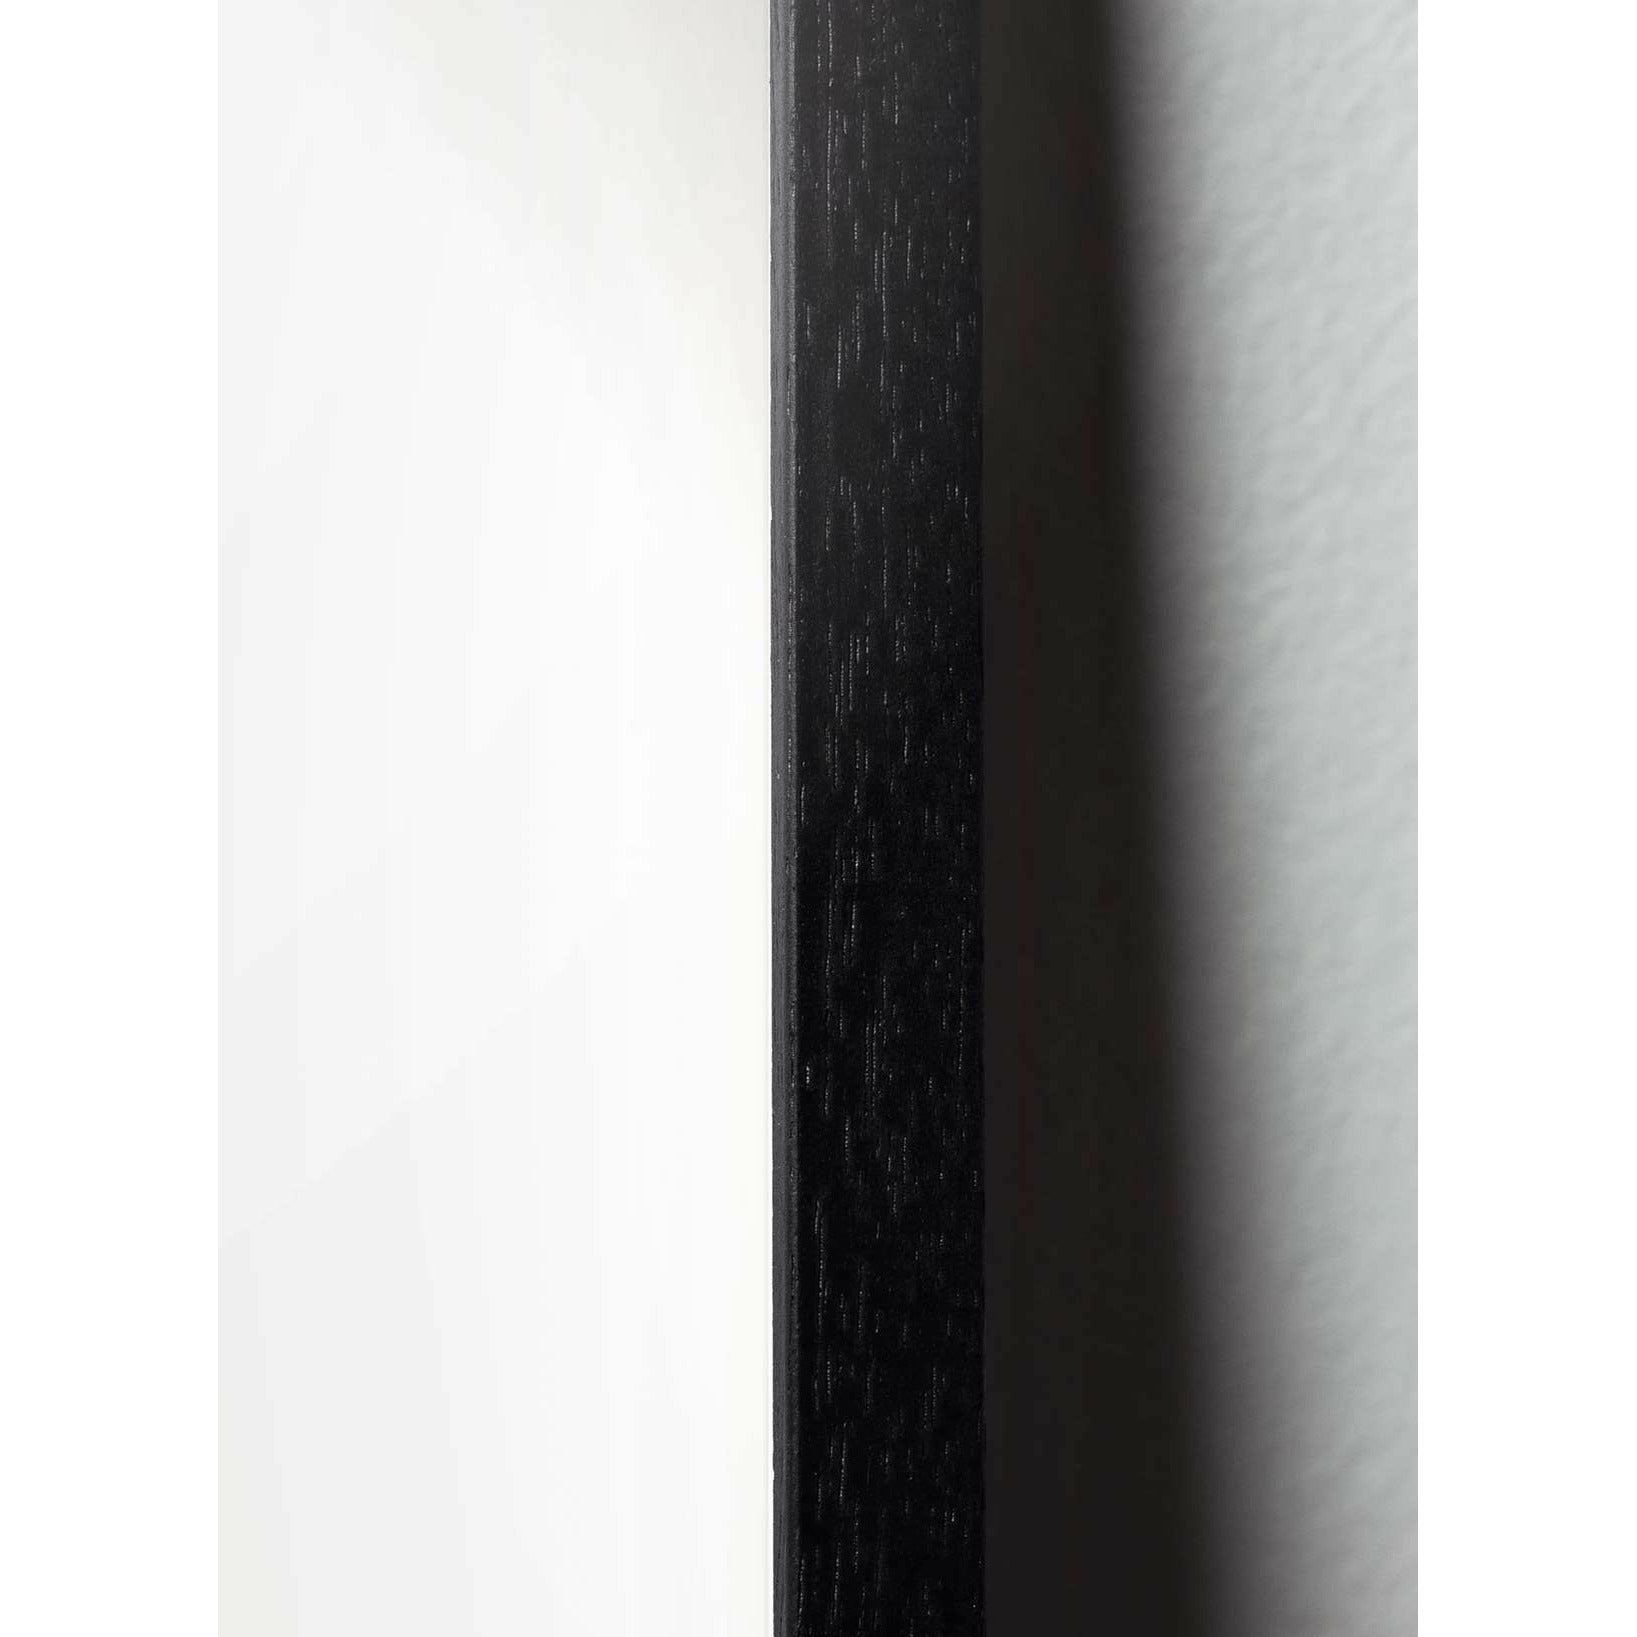 Brainchild Designikoner affisch, ram i svart -målat trä 50x70 cm, grå